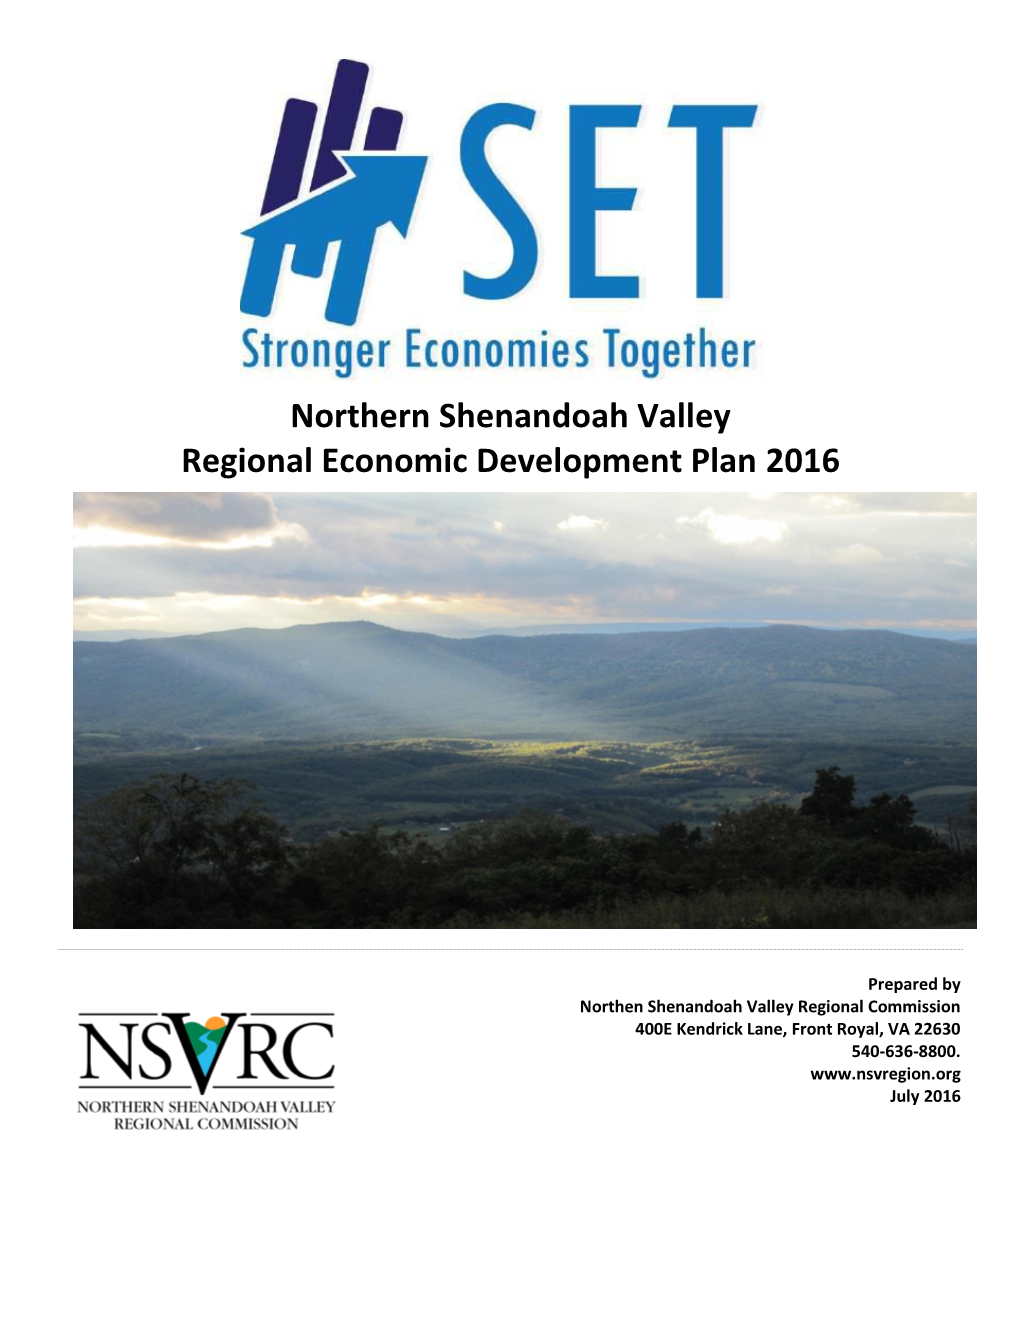 Northern Shenandoah Valley Regional Economic Development Plan 2016